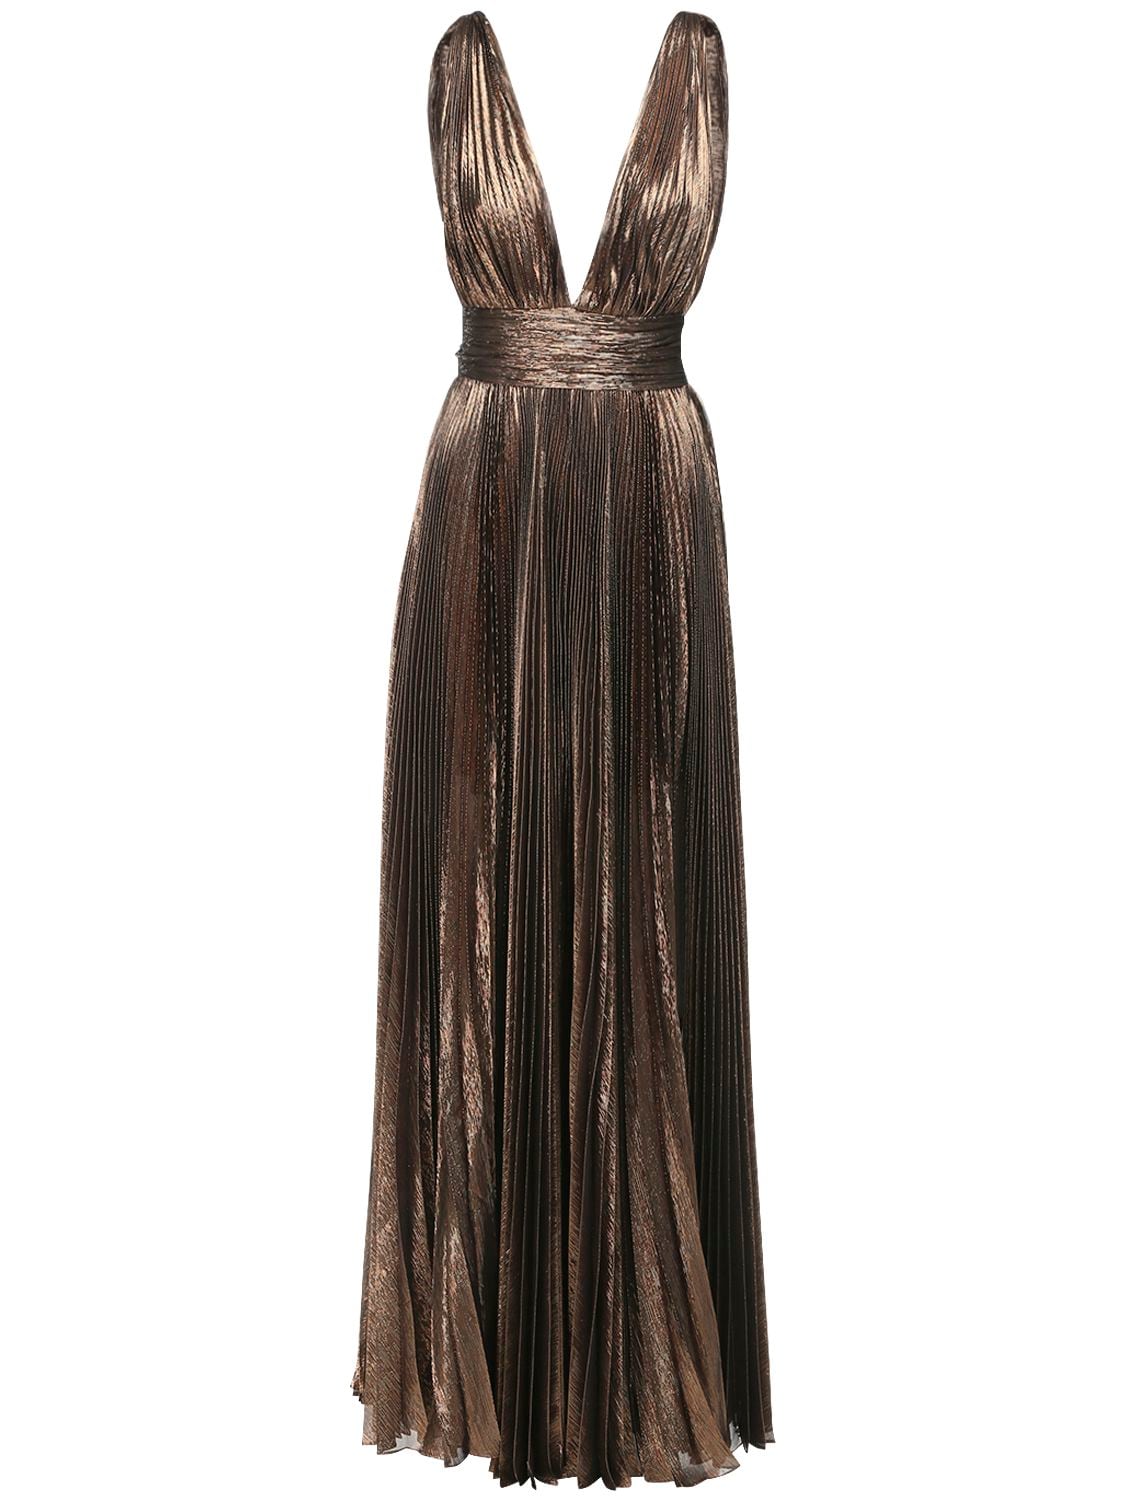 dressing gownRTO CAVALLI PLEATED LAMÉ CHIFFON LONG DRESS,72IADJ004-MDU1NTK1